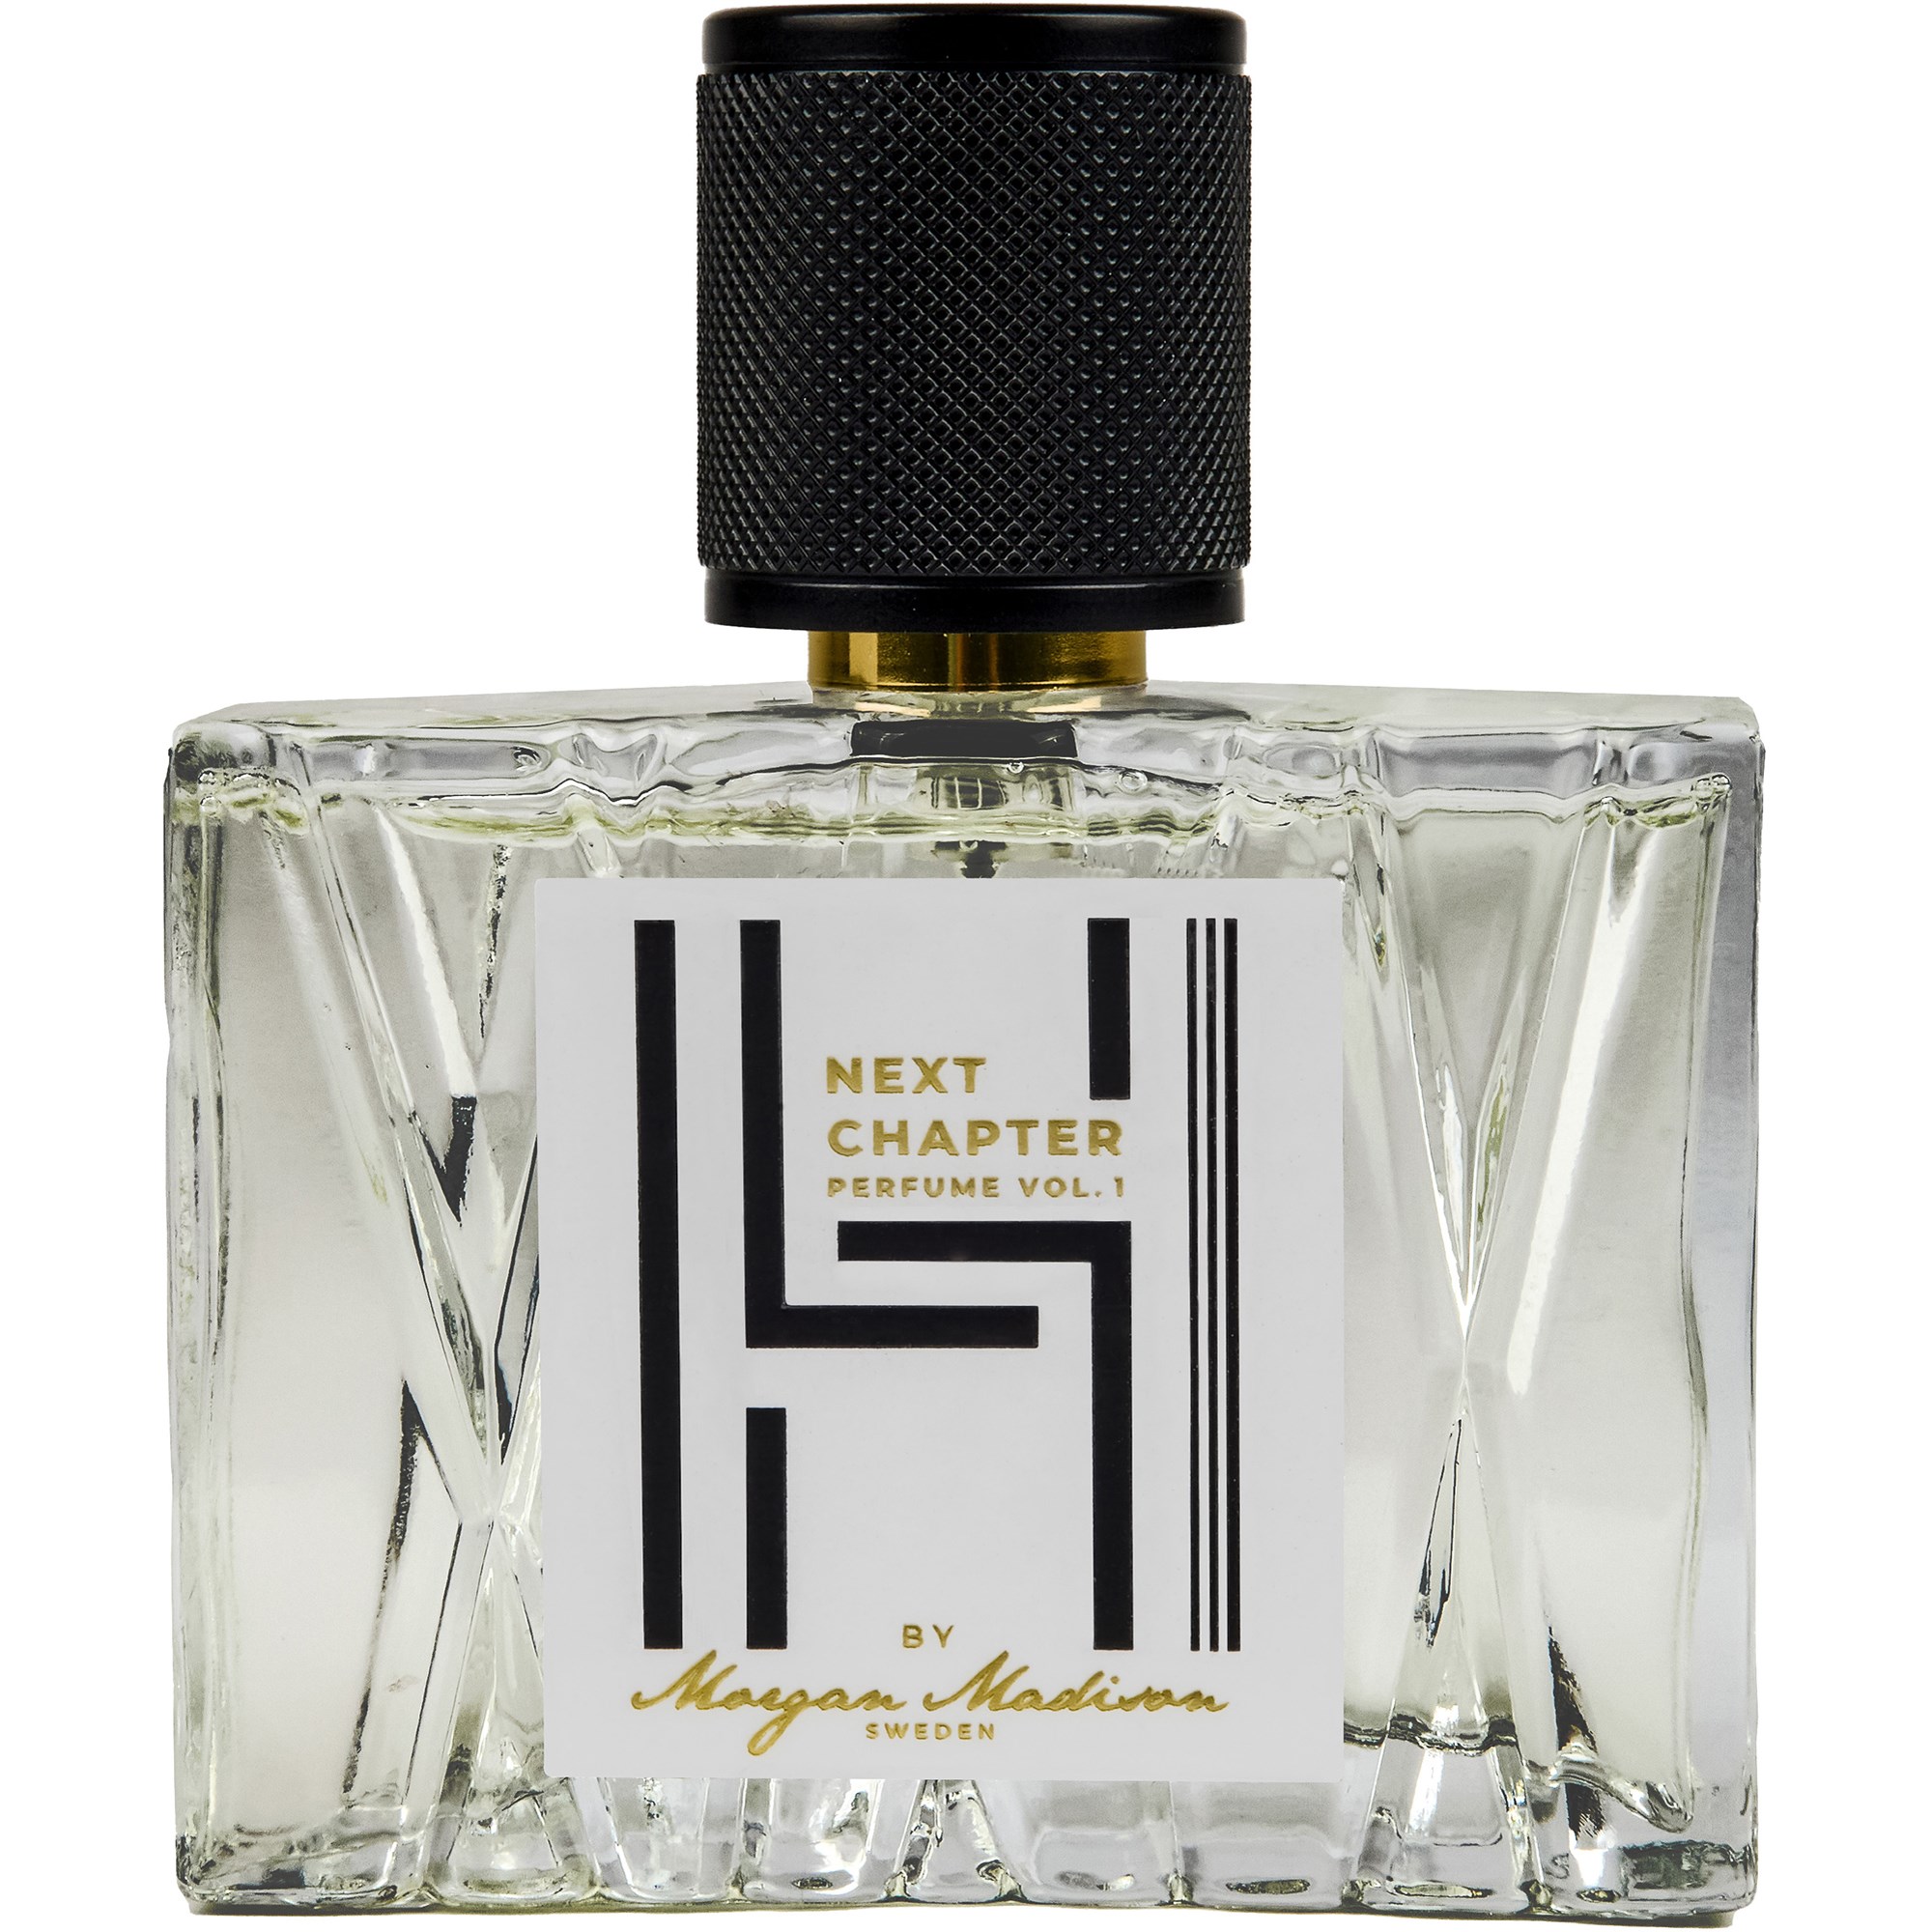 HL Perfumes by Morgan Madison Next Chapter Vol. 1 Perfume 70 ml